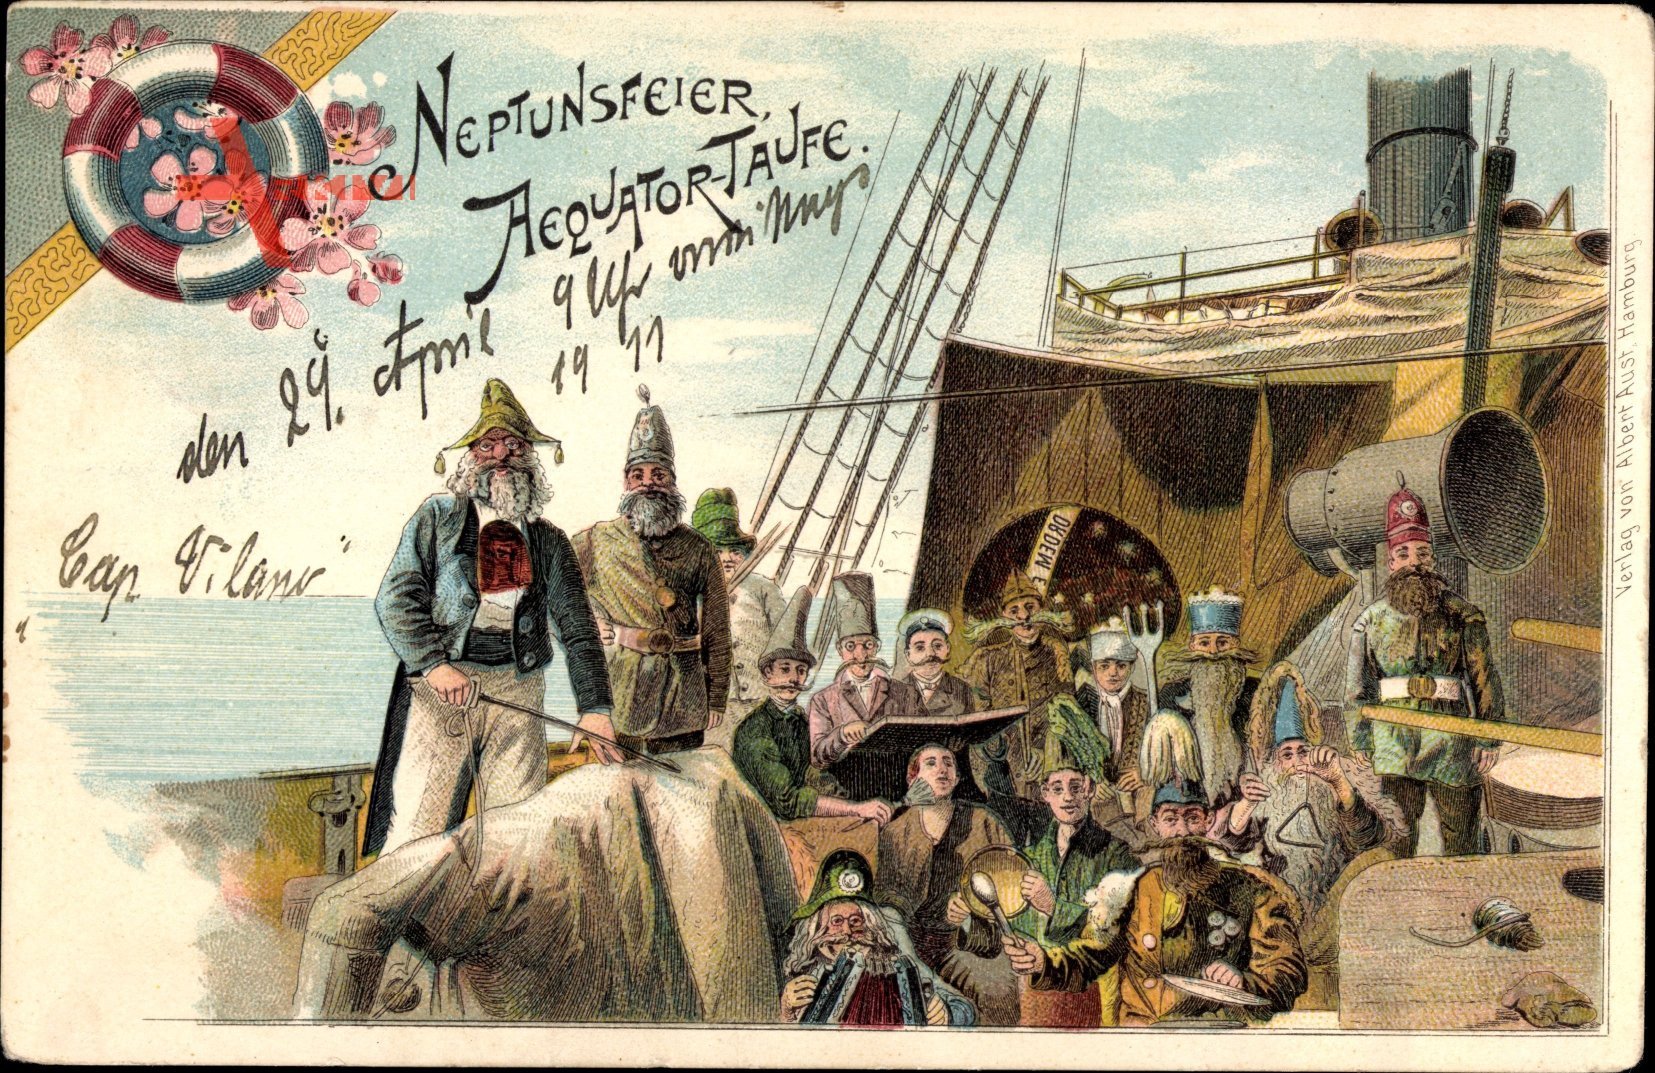 Neptunsfeier, Äquatortaufe, Seeleute in Kostümen, Dampfschiff